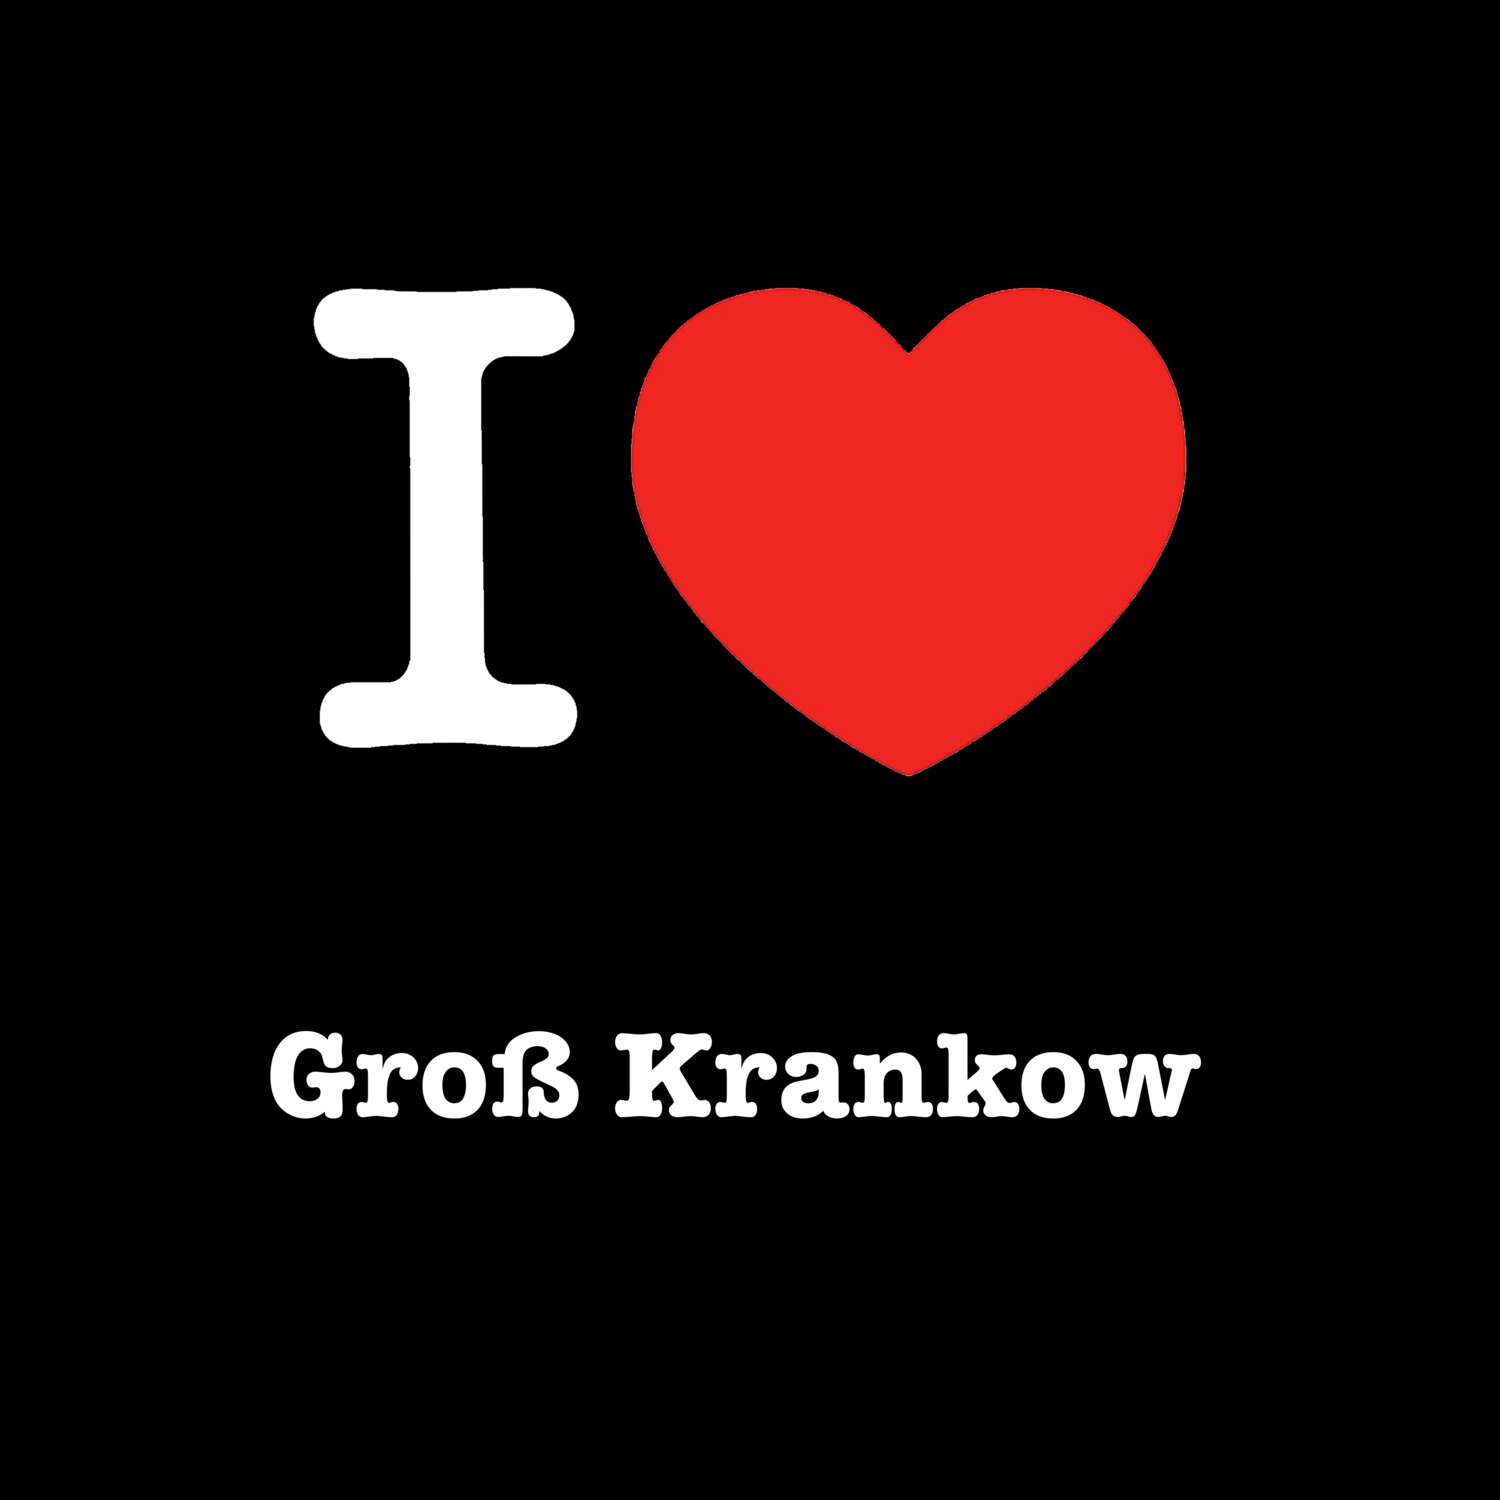 Groß Krankow T-Shirt »I love«